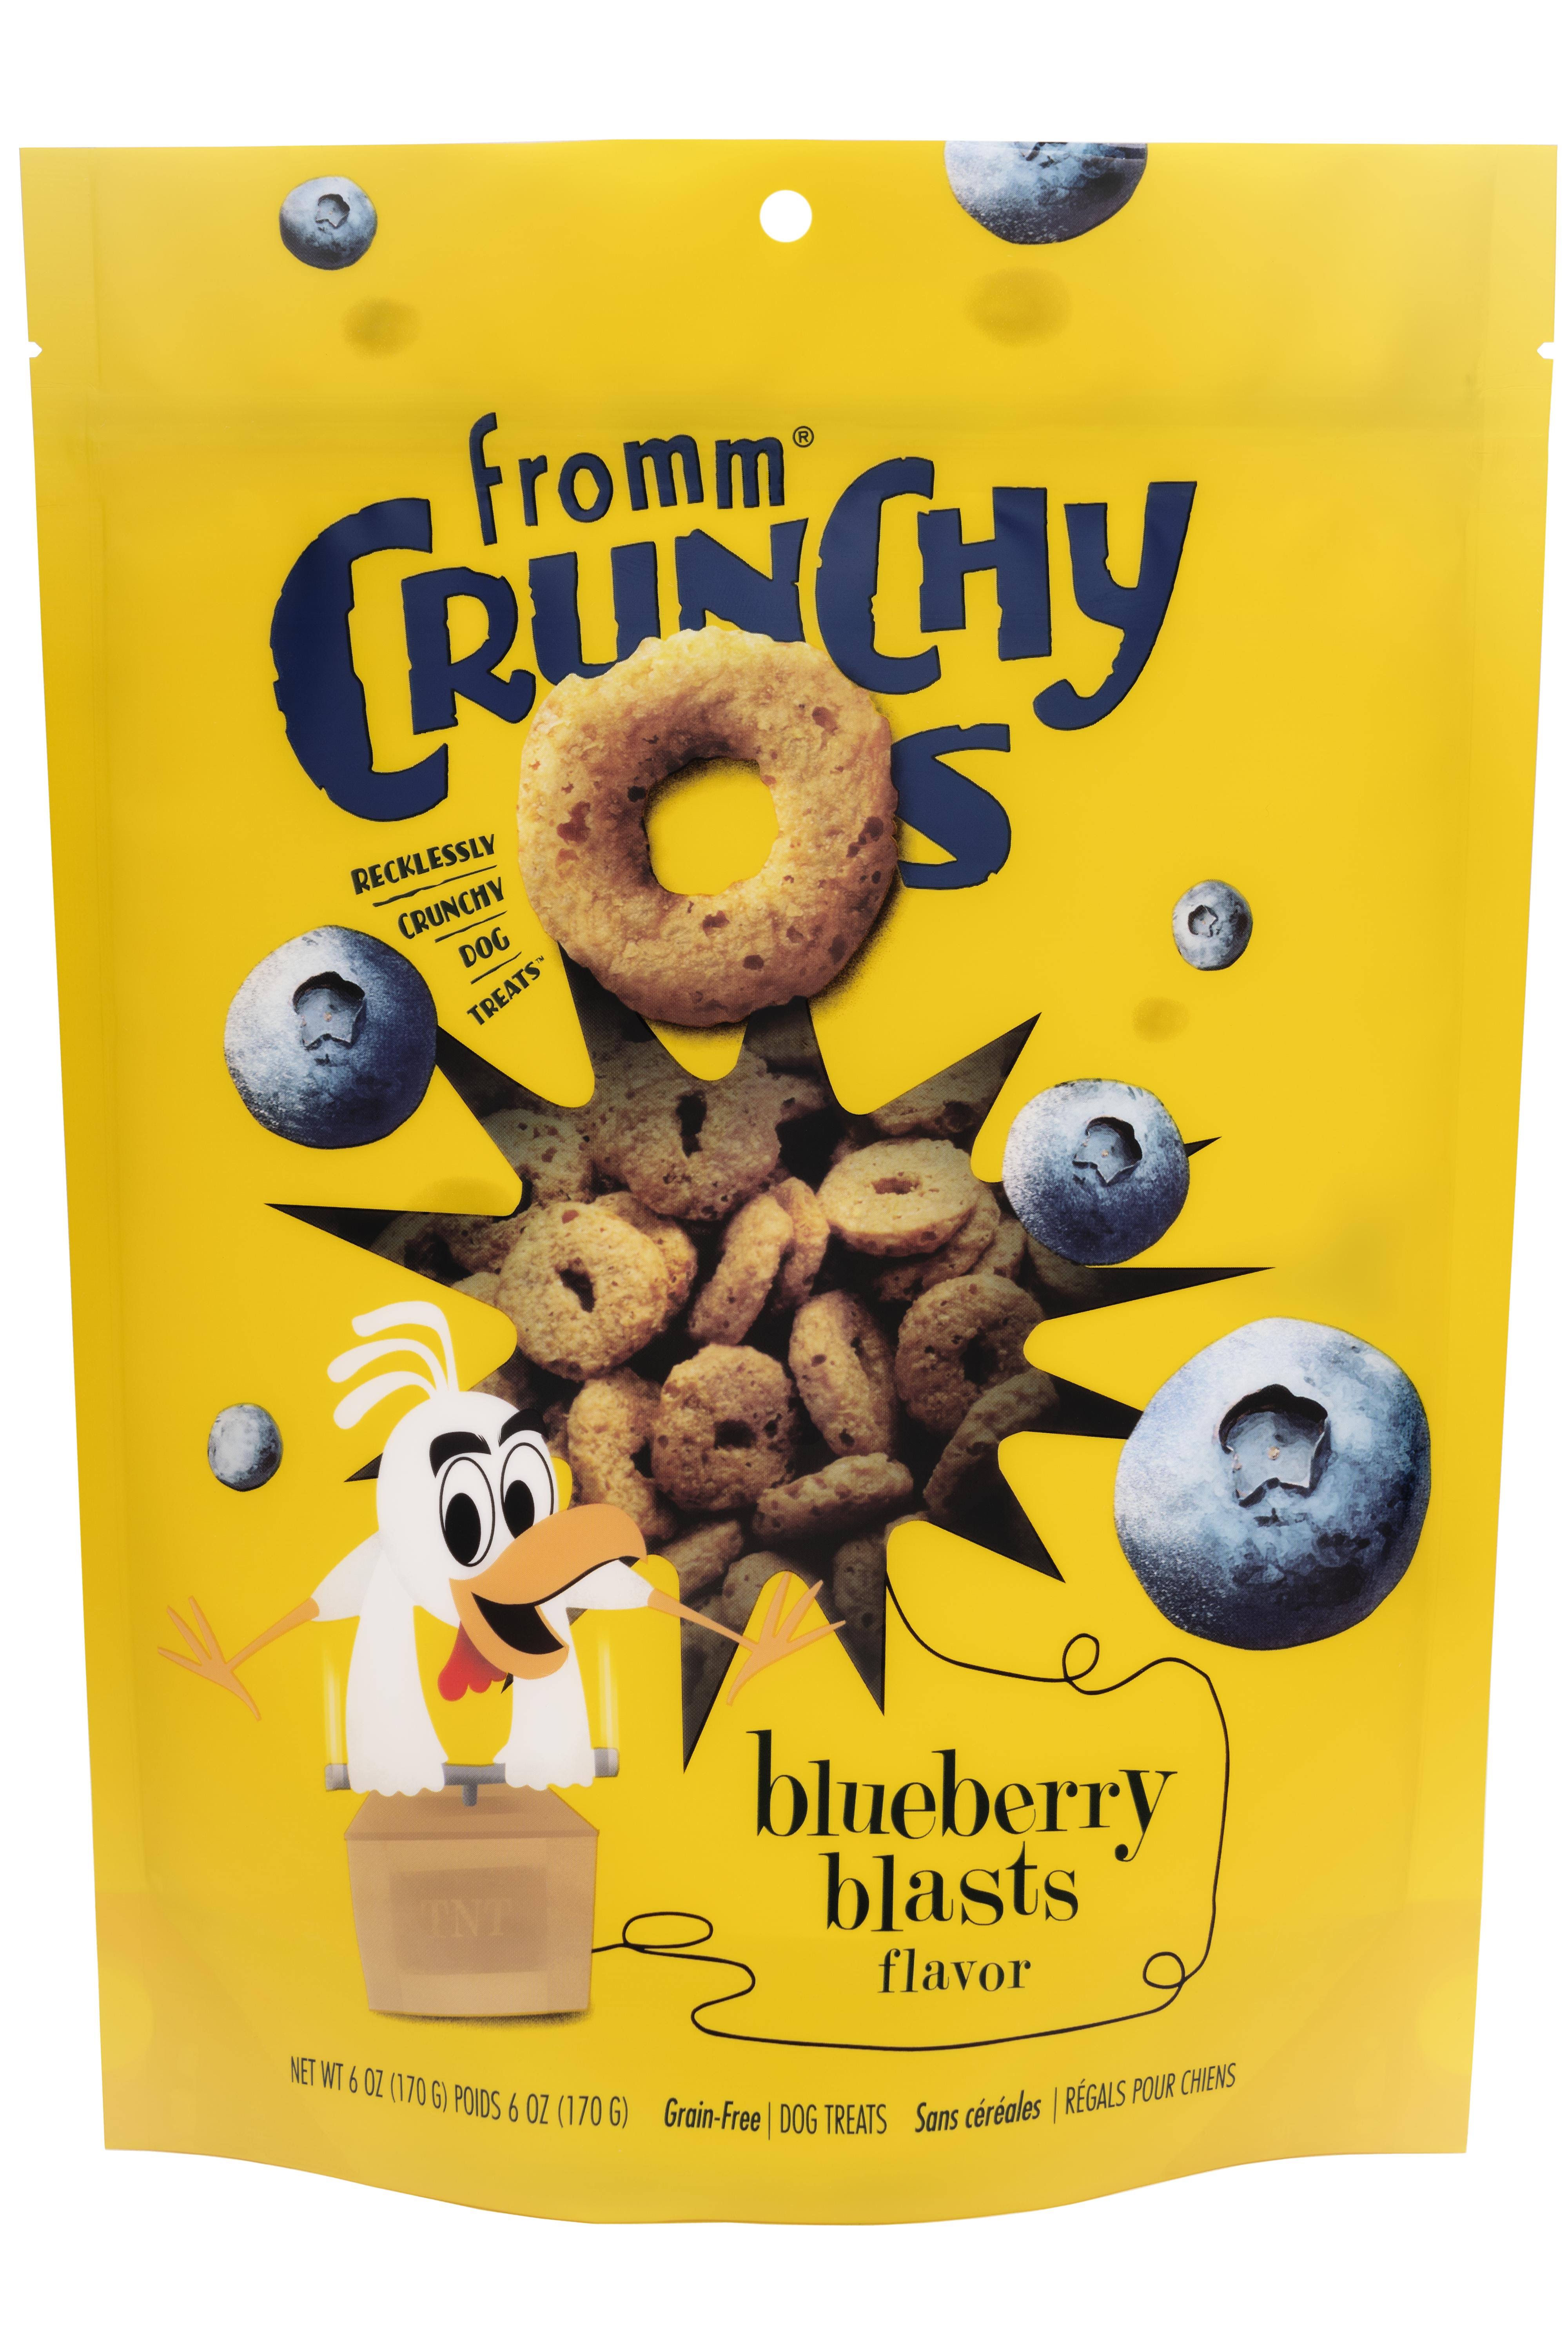 Fromm Crunchy OS Blueberry Blasts Dog Treats 6 oz